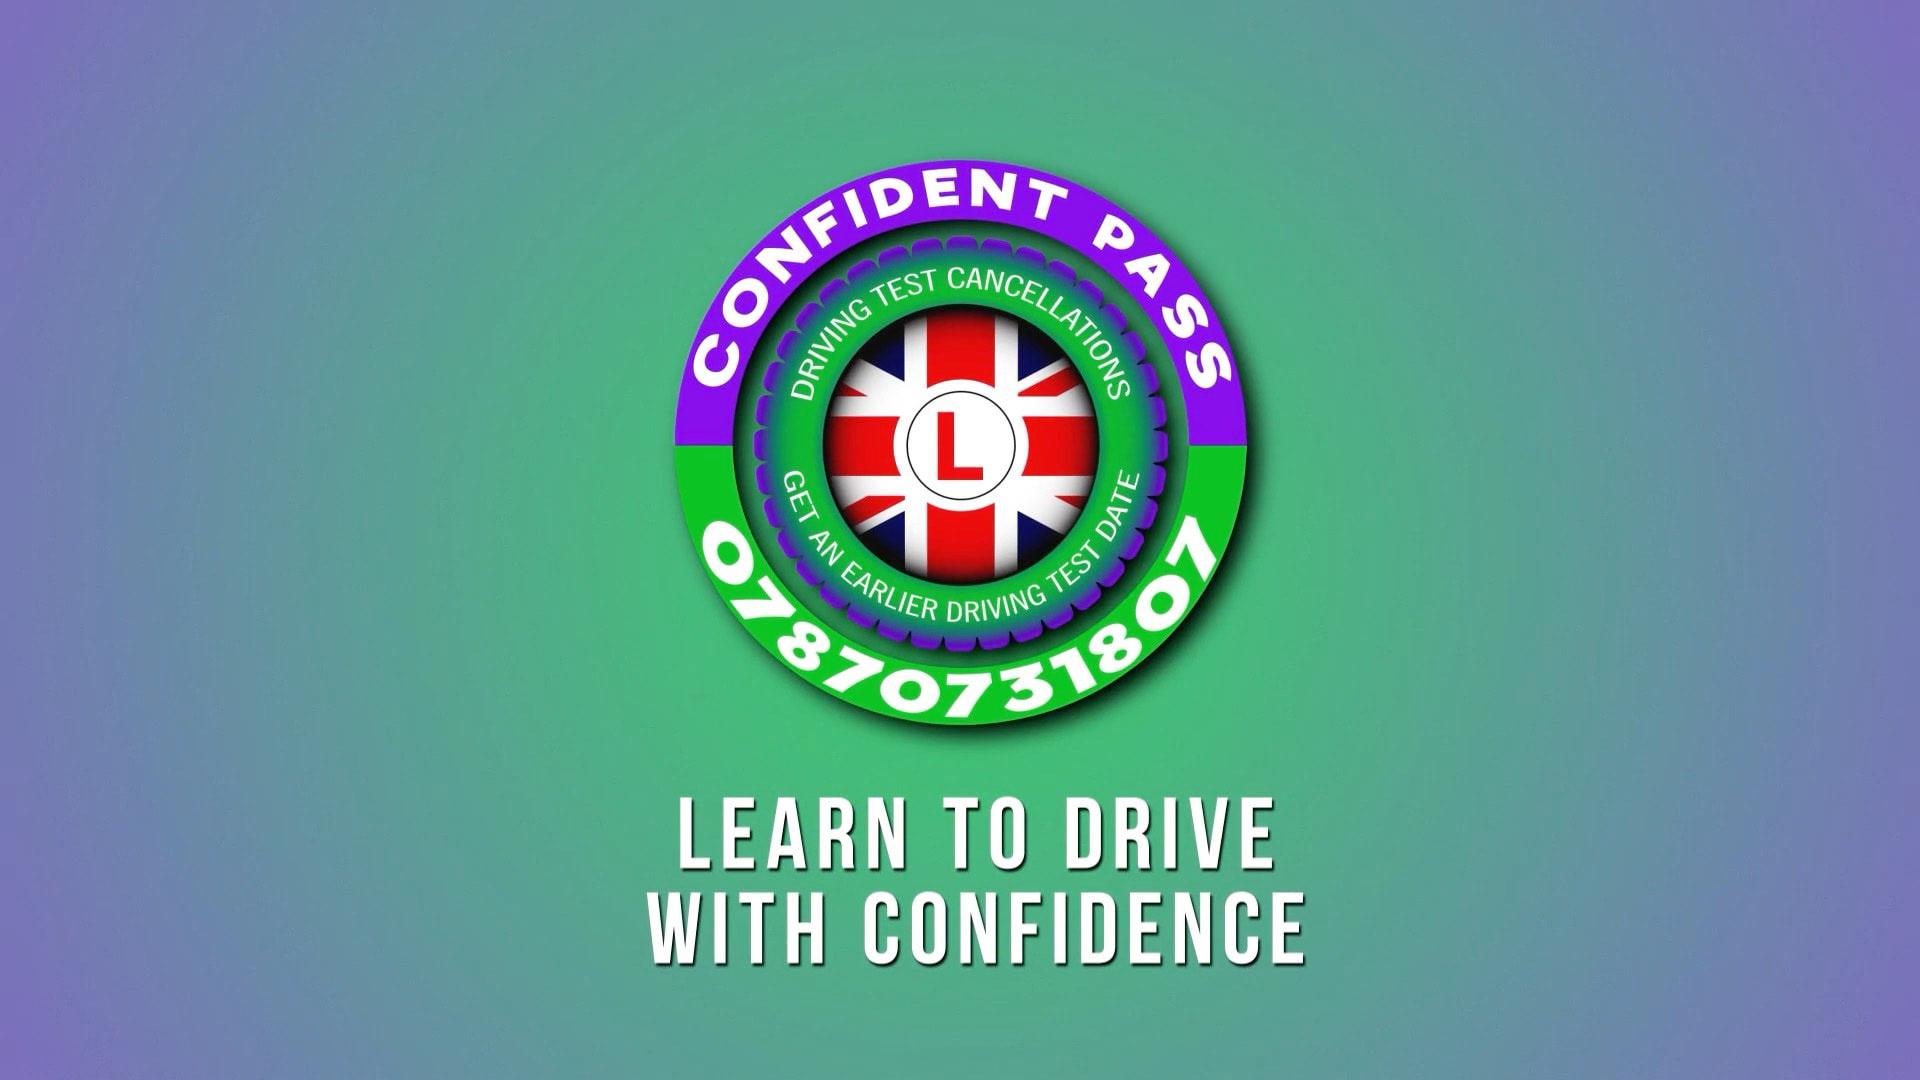 Images Confident Pass Driving School